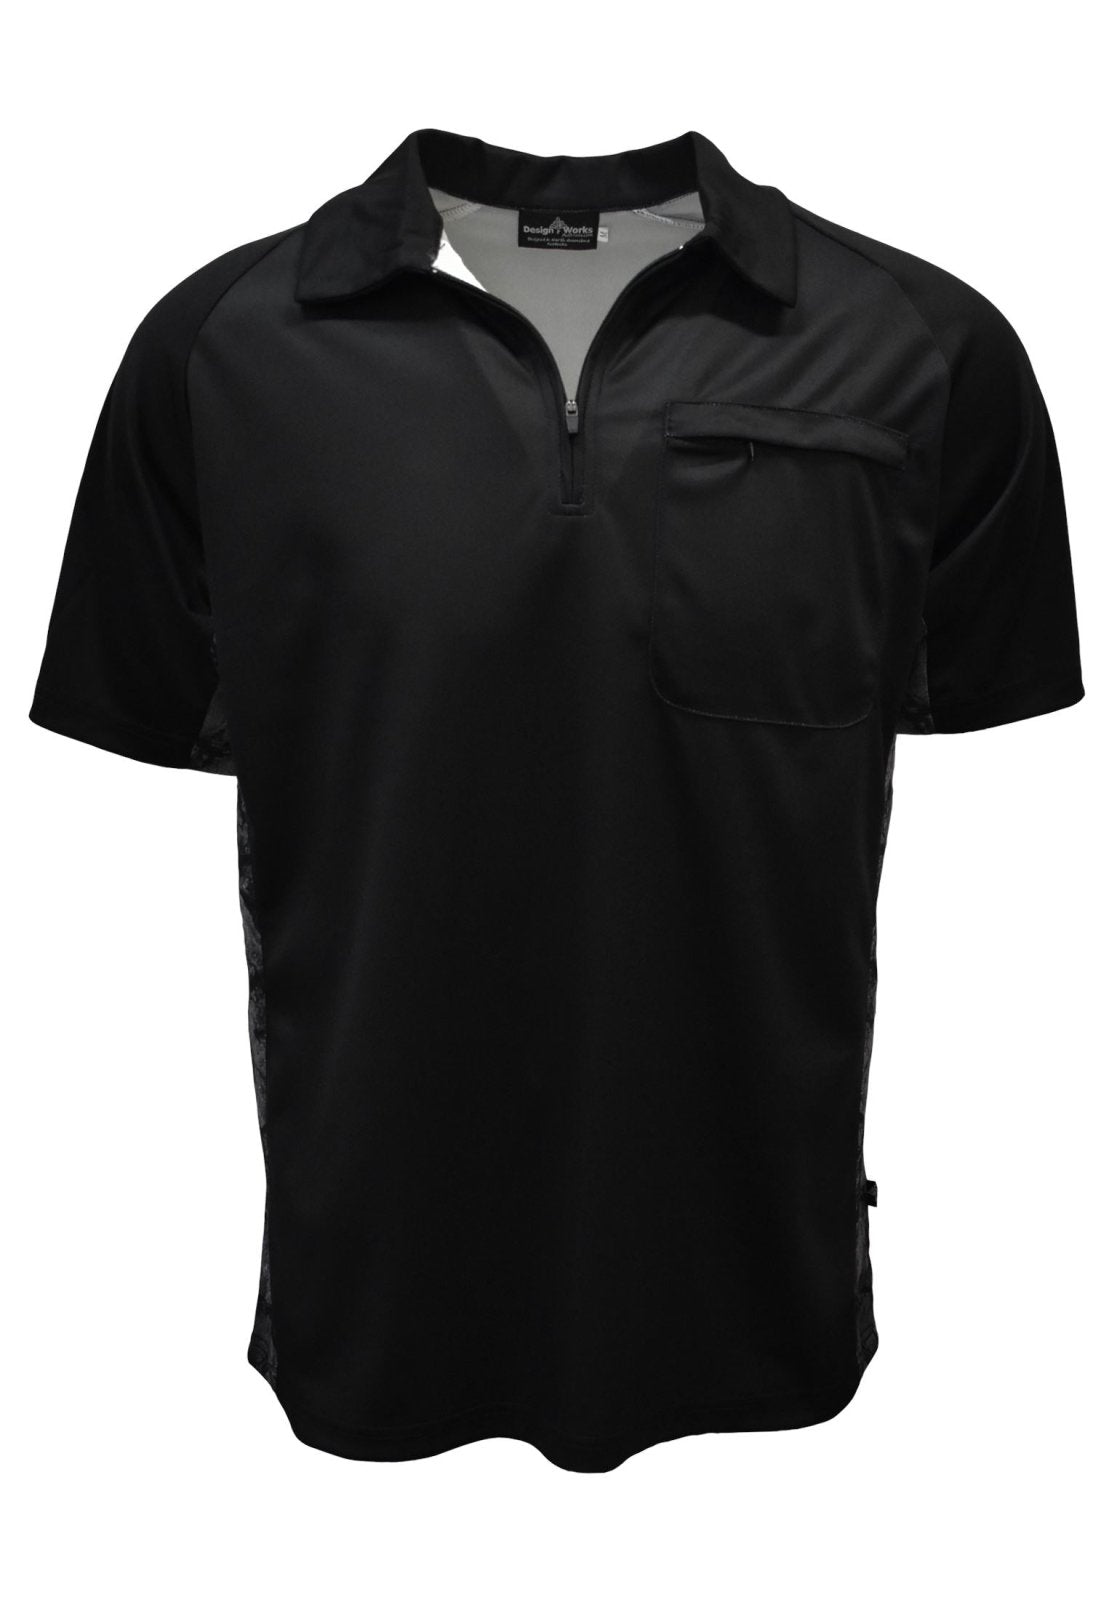 Sports Black Adult Short Sleeve UV Protective Golf Plain Fishing Shirt